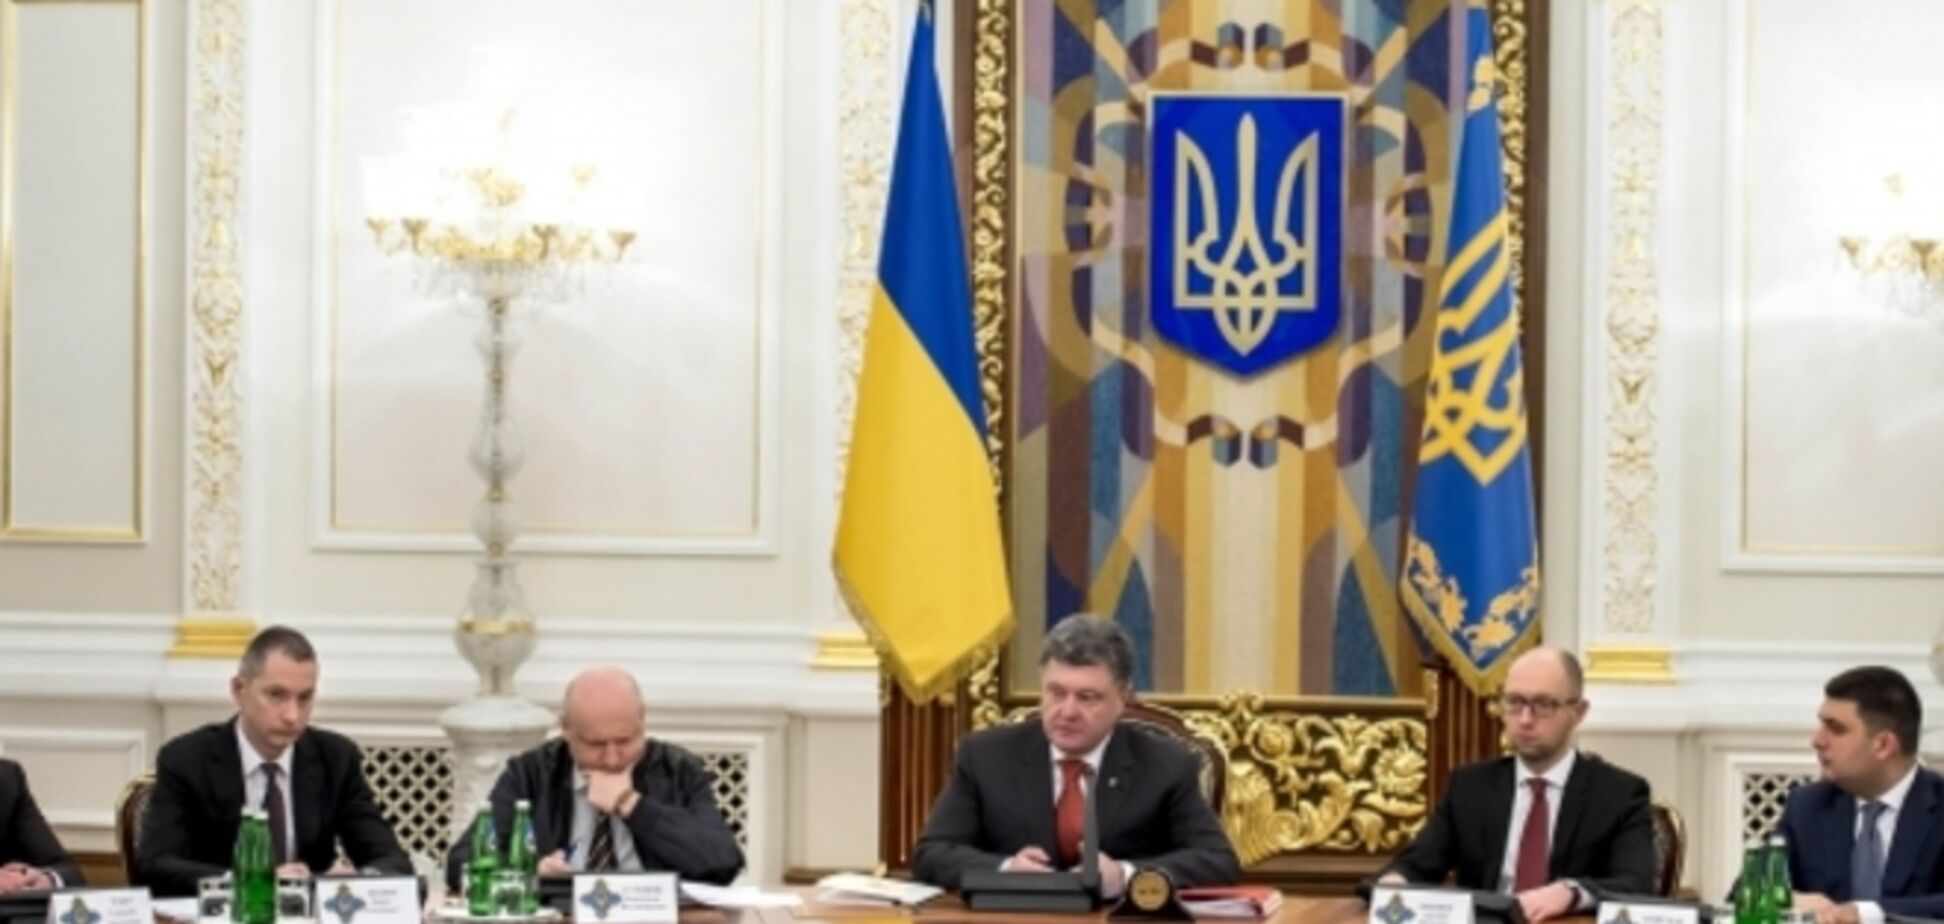 Україна надасть гумдопомогу Донбасу, але не фінансуватиме 'республіки' - РНБО